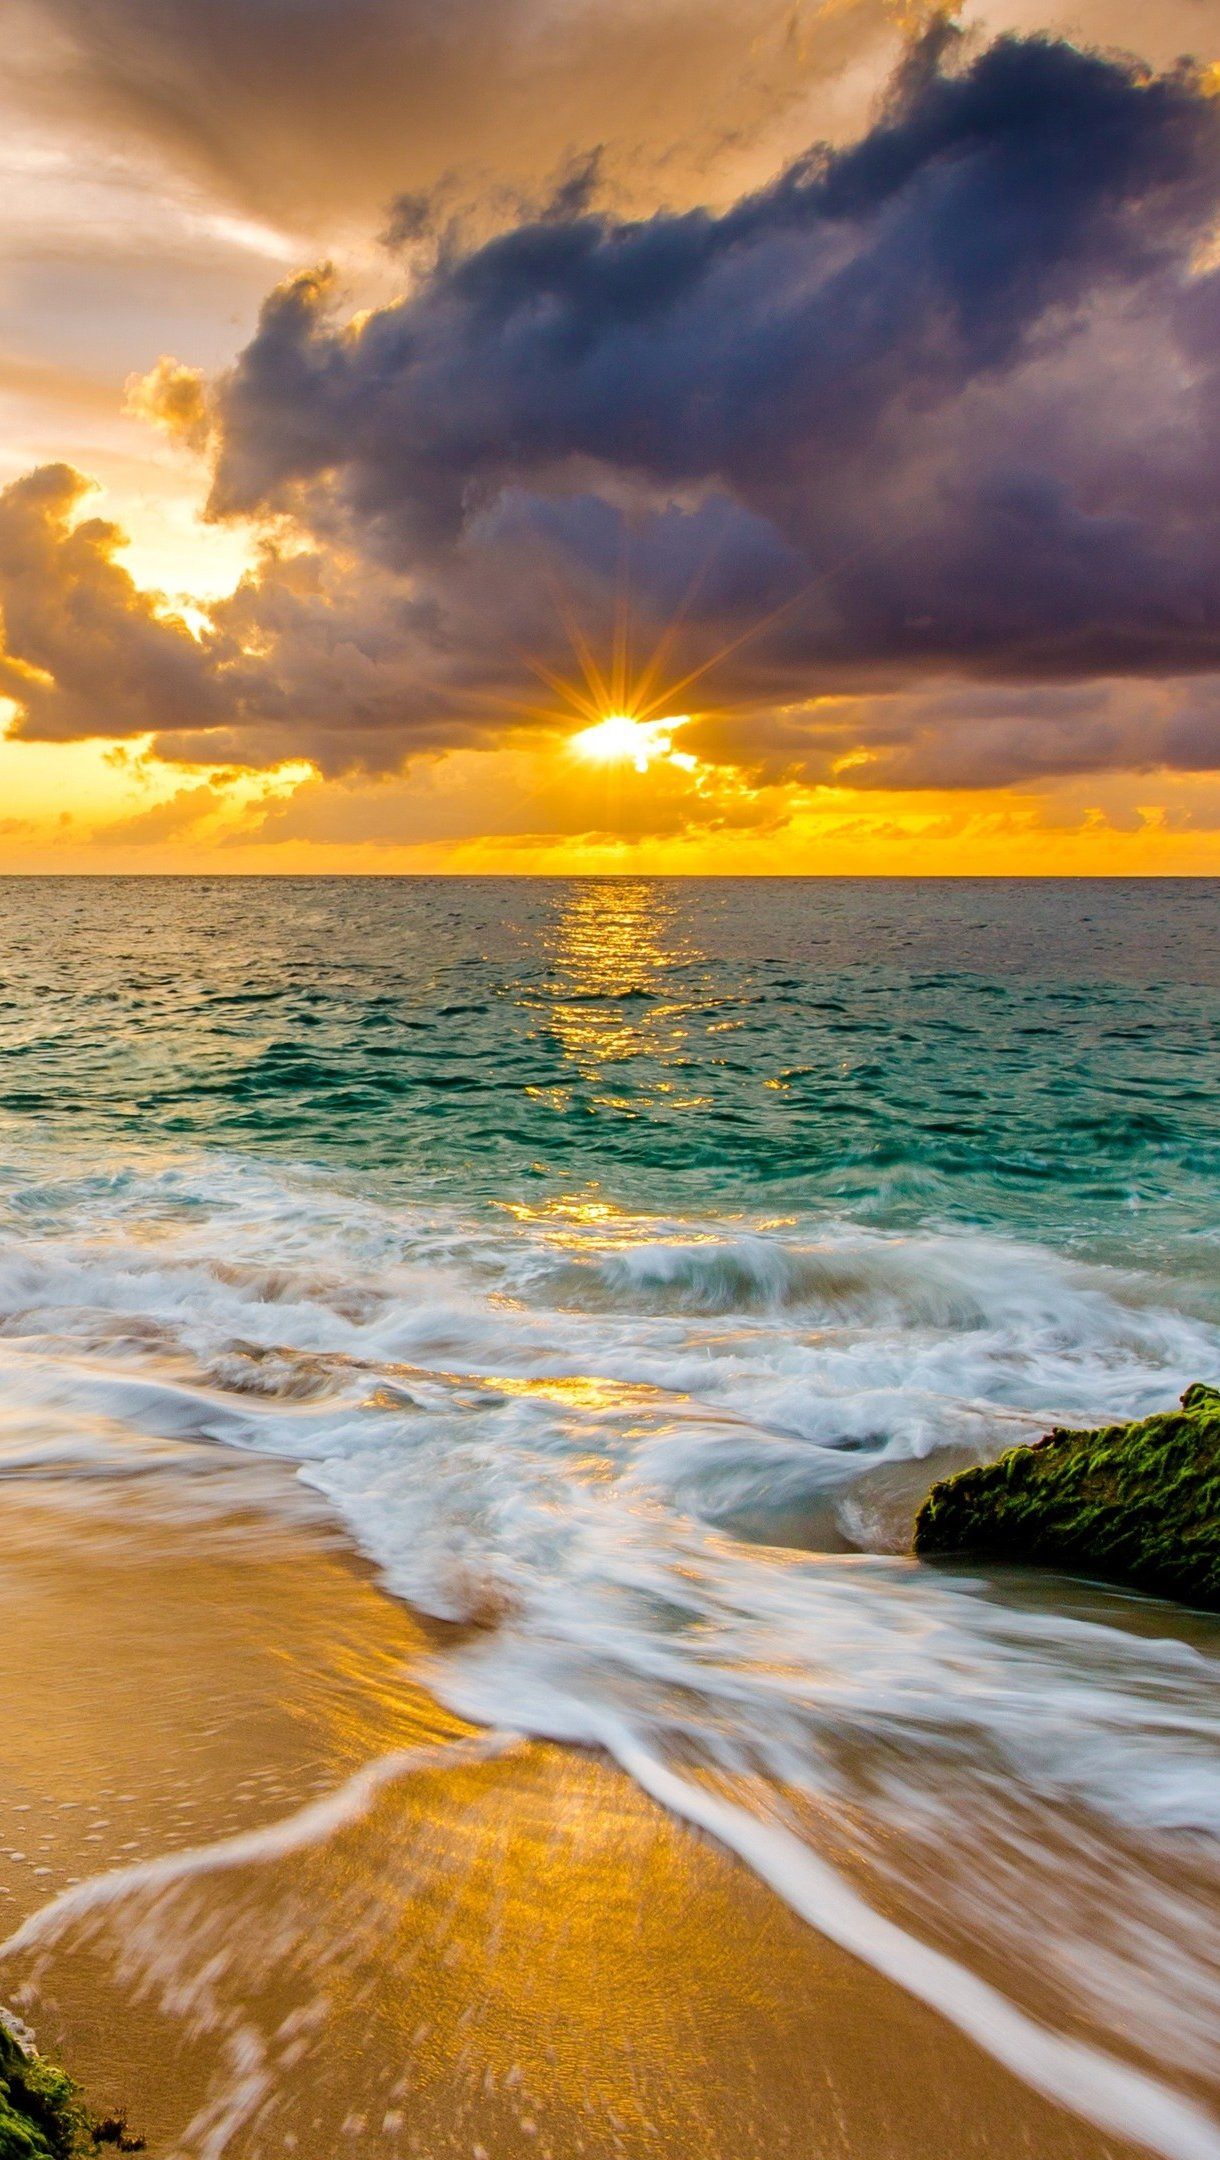 Sunset in Hawaii Beach Wallpaper 4k Ultra HD